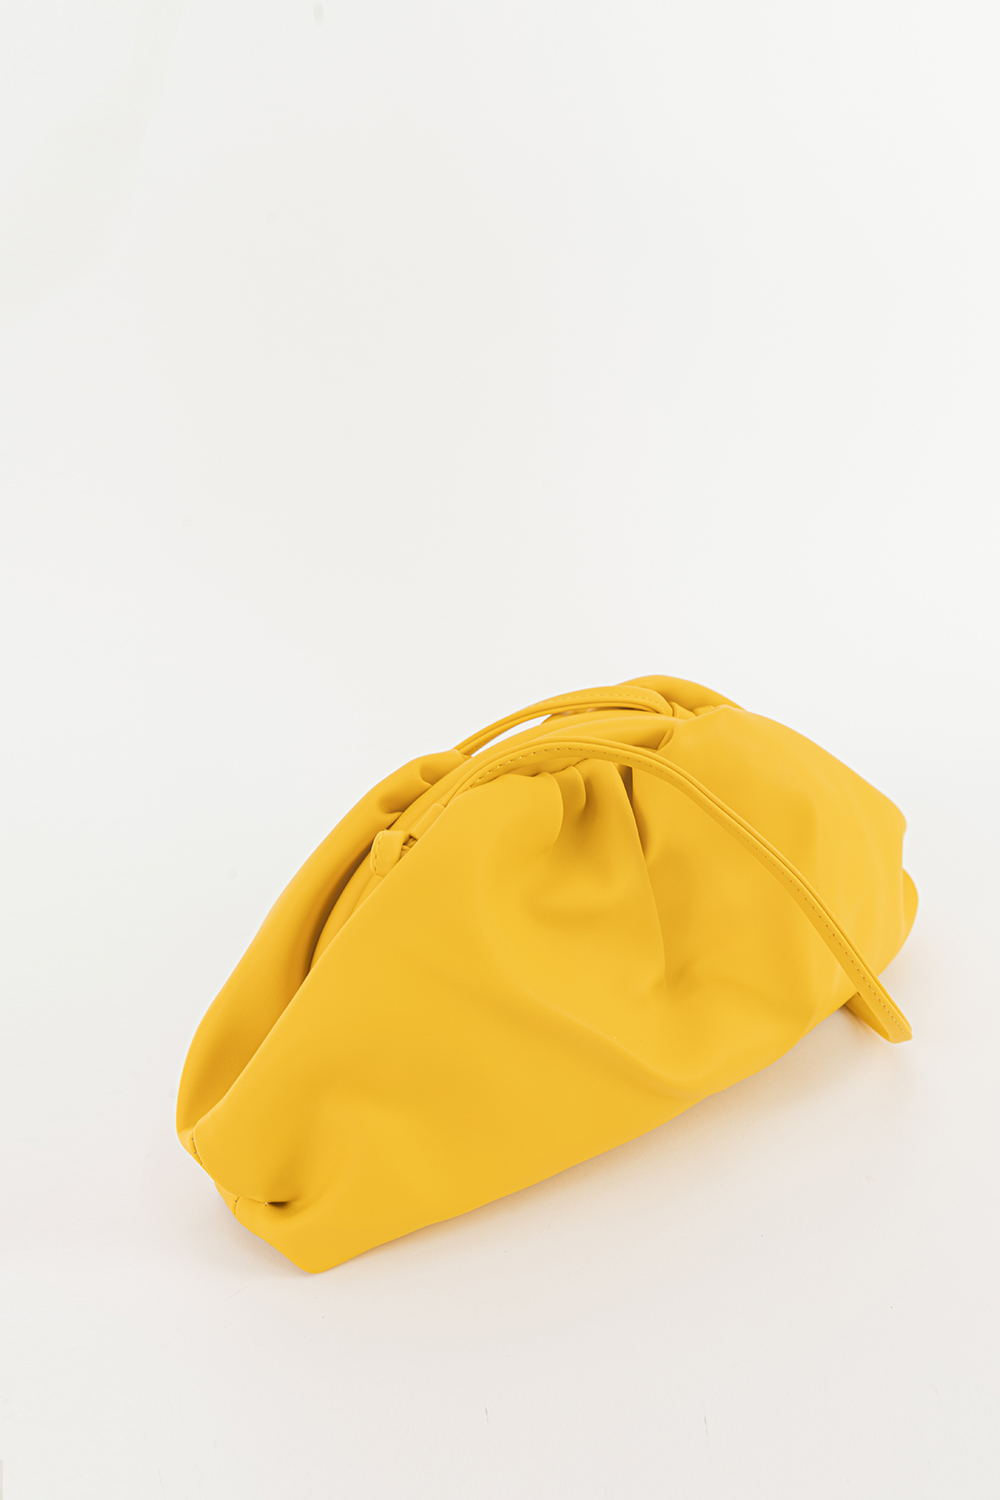 Alissa Sarı Kadın Çanta